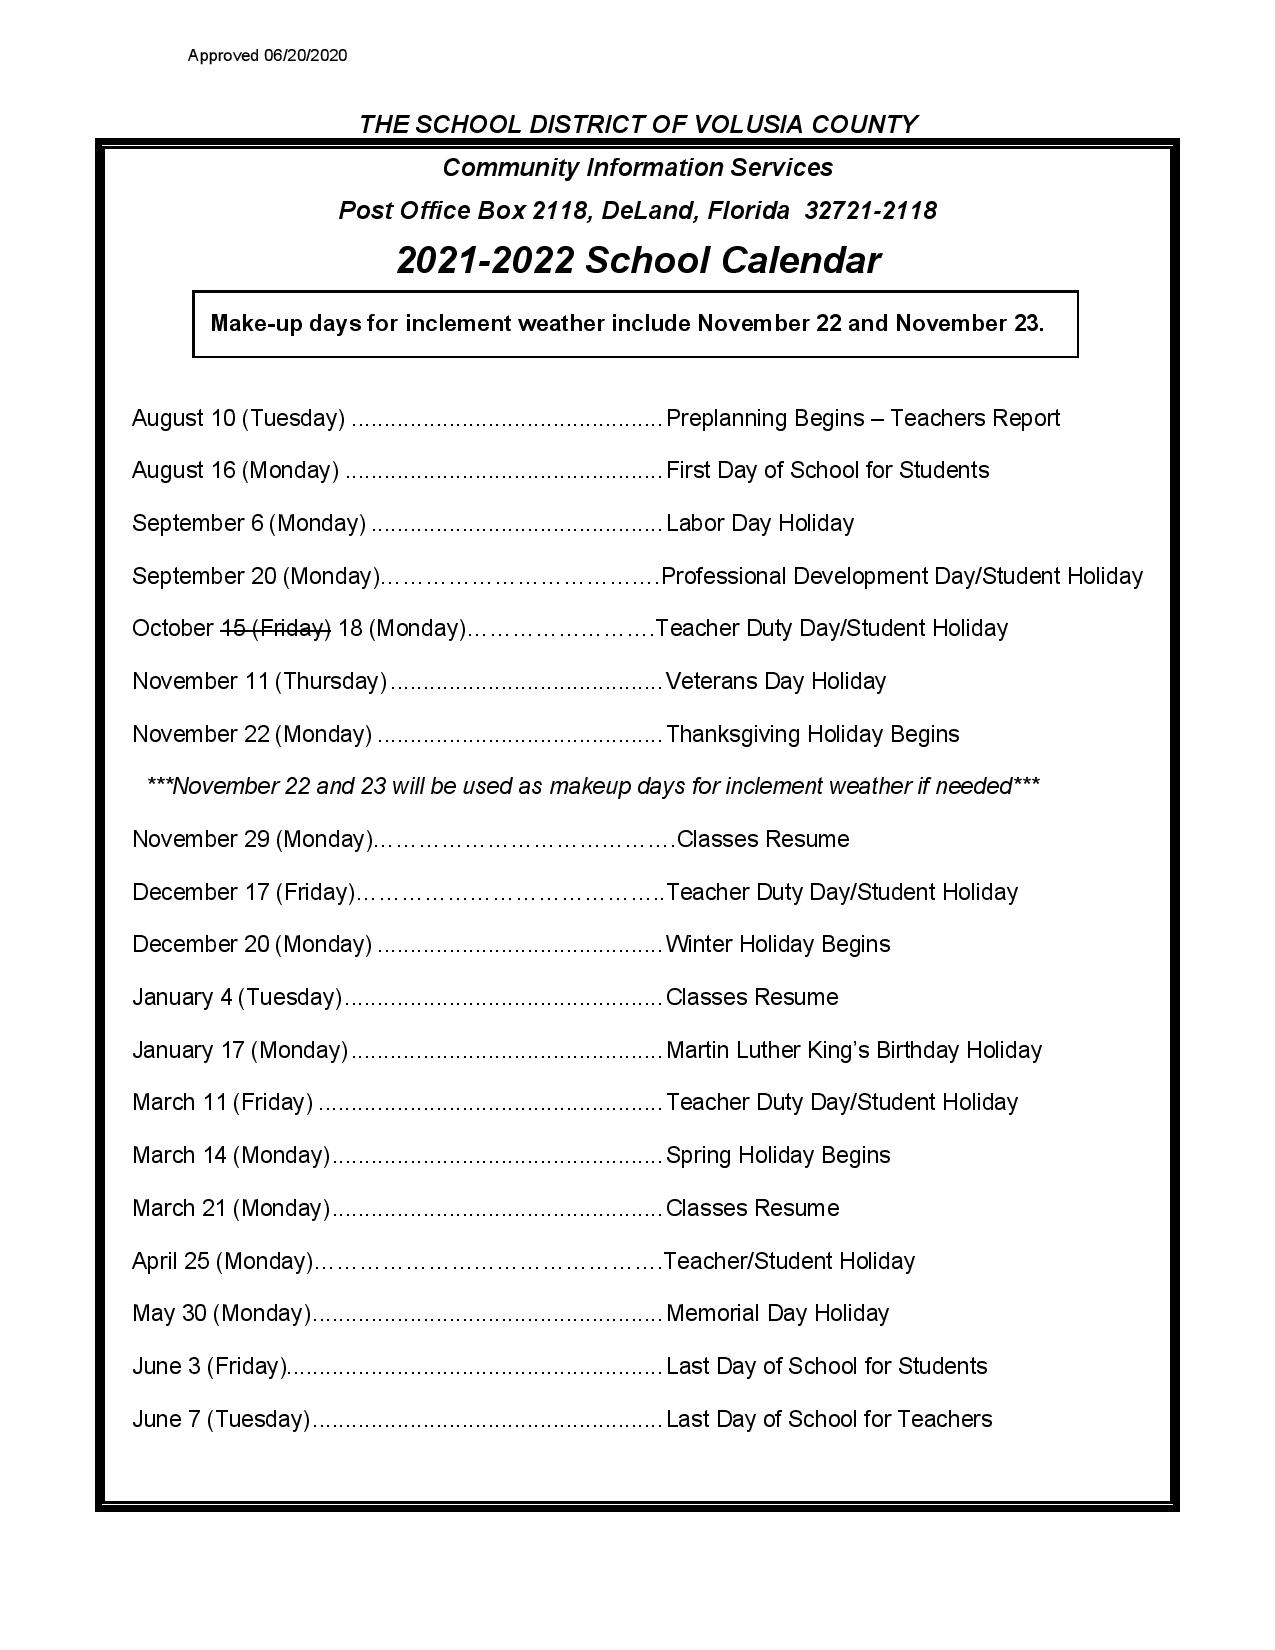 Volusia County Schools Calendar 2021 2022 In Pdf